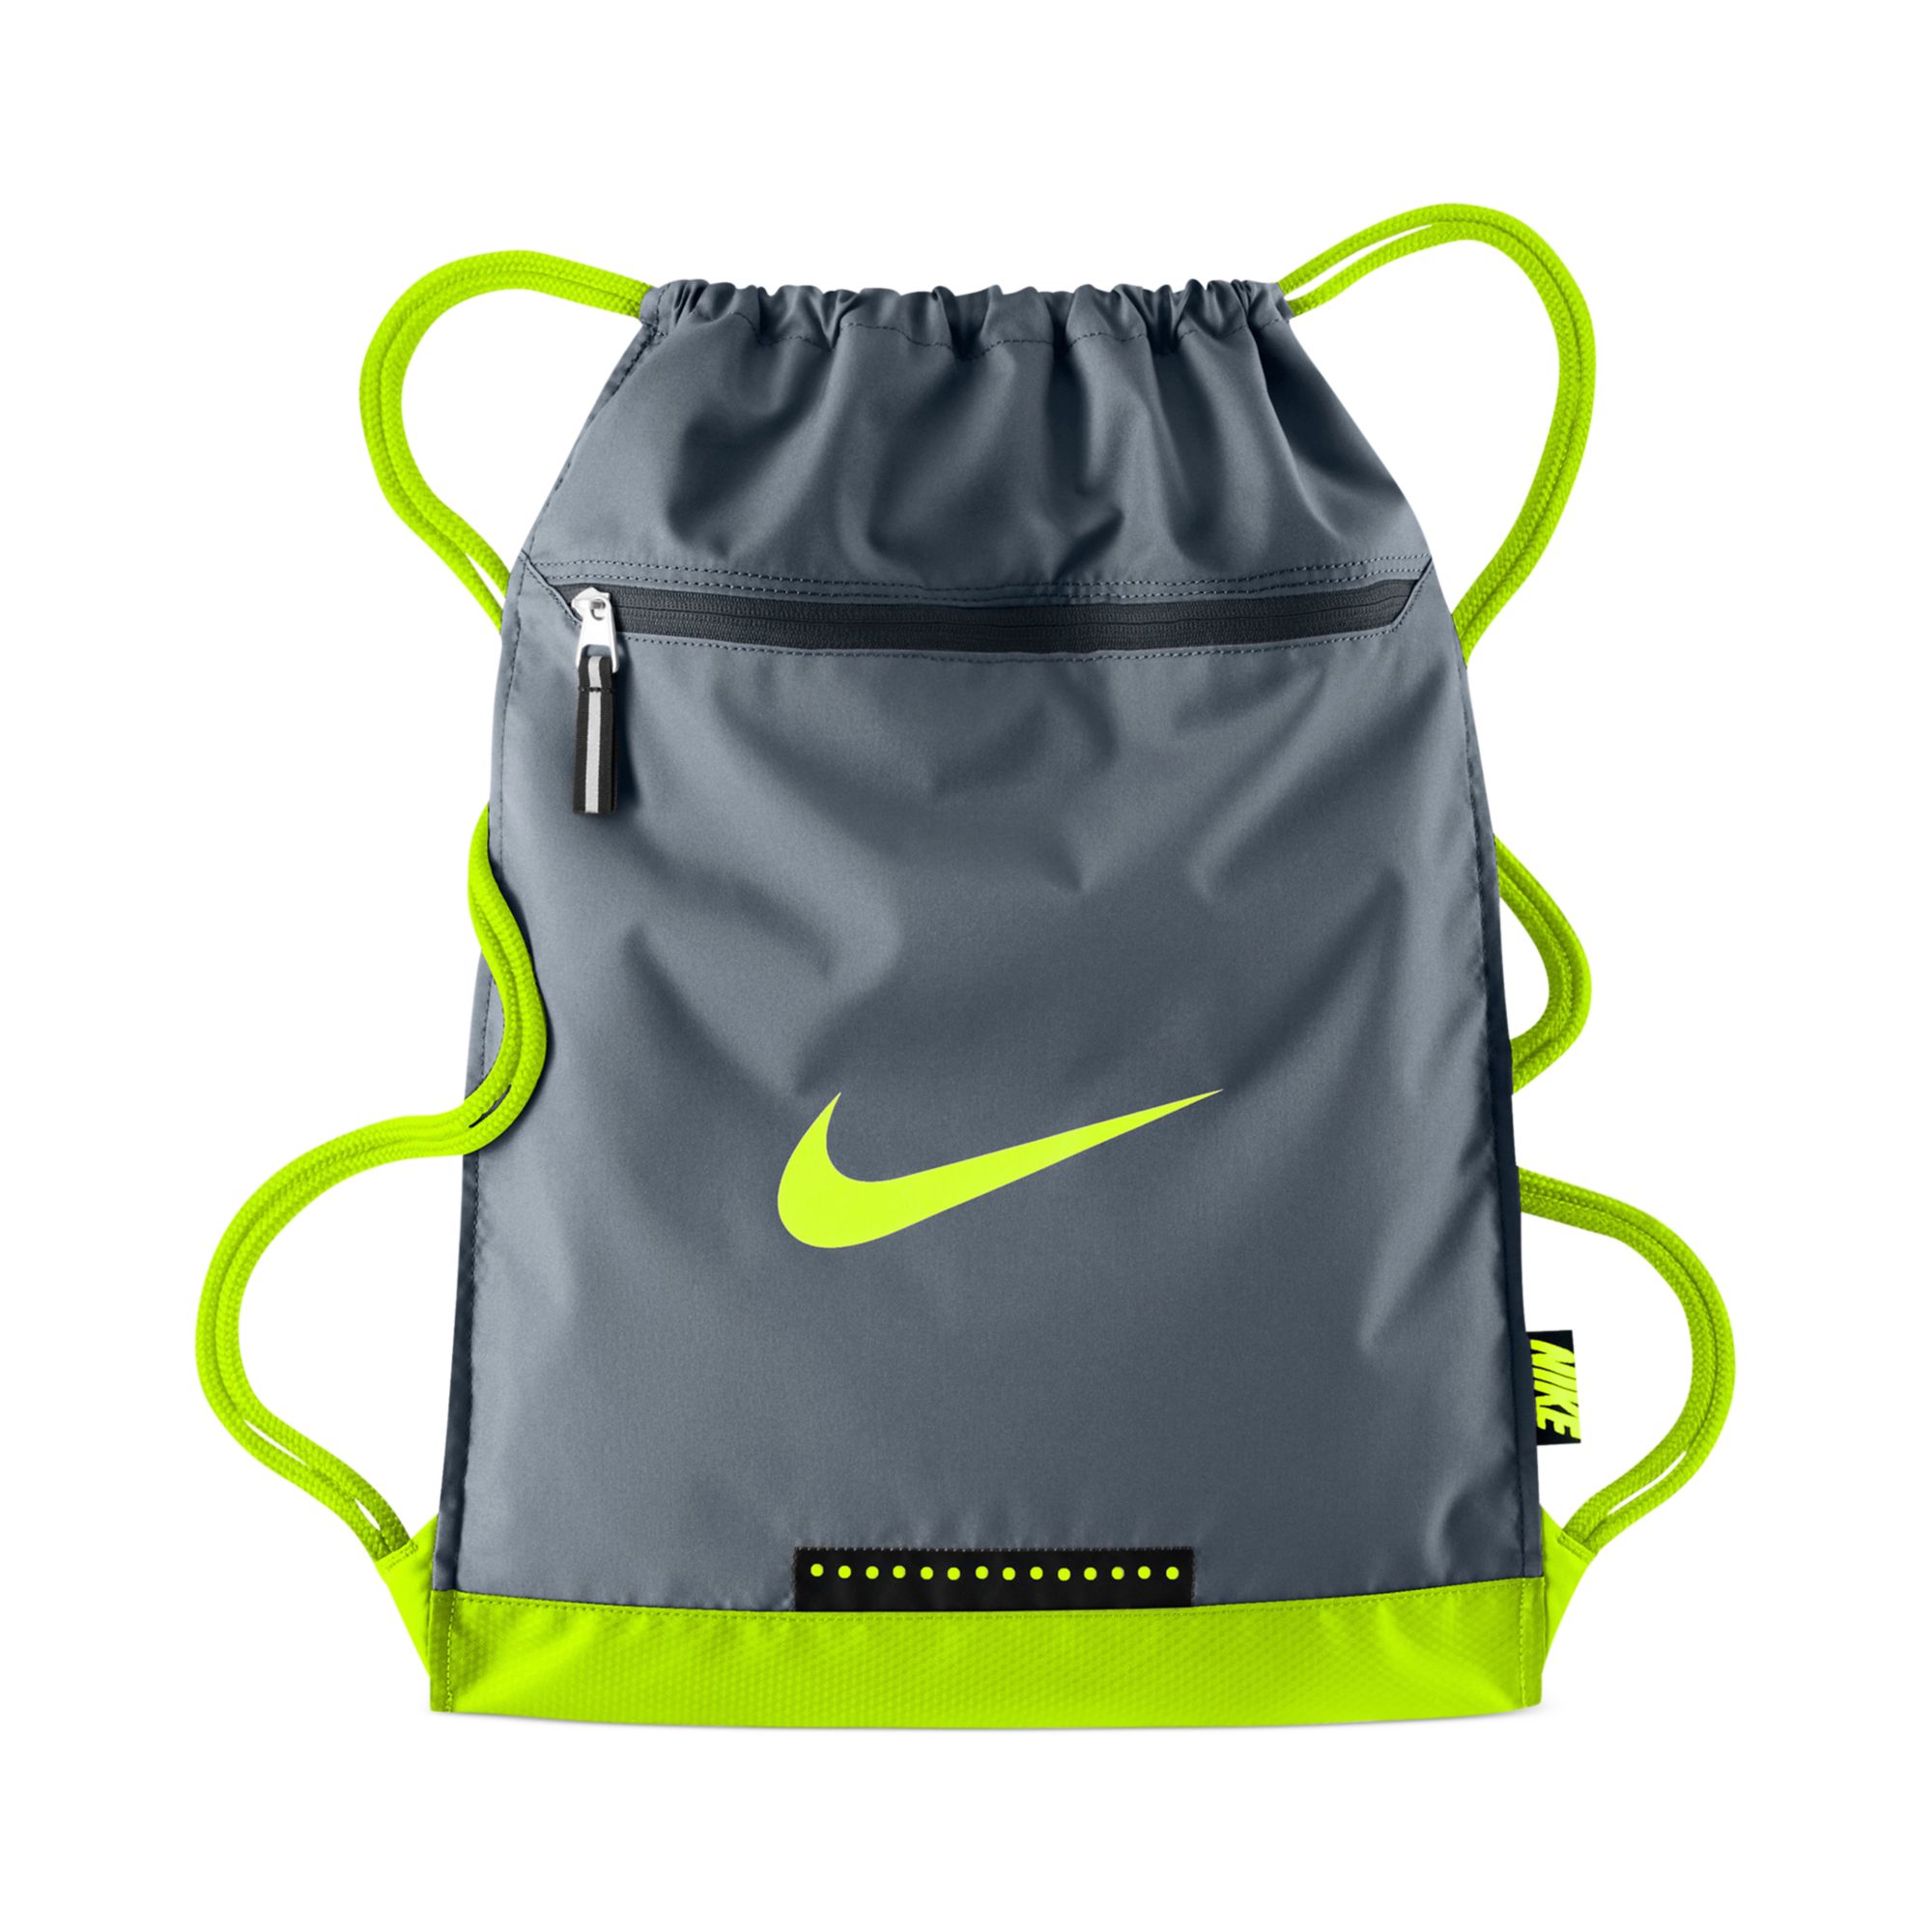 Download Lyst - Nike Team Training Gymsack Bag in Gray for Men